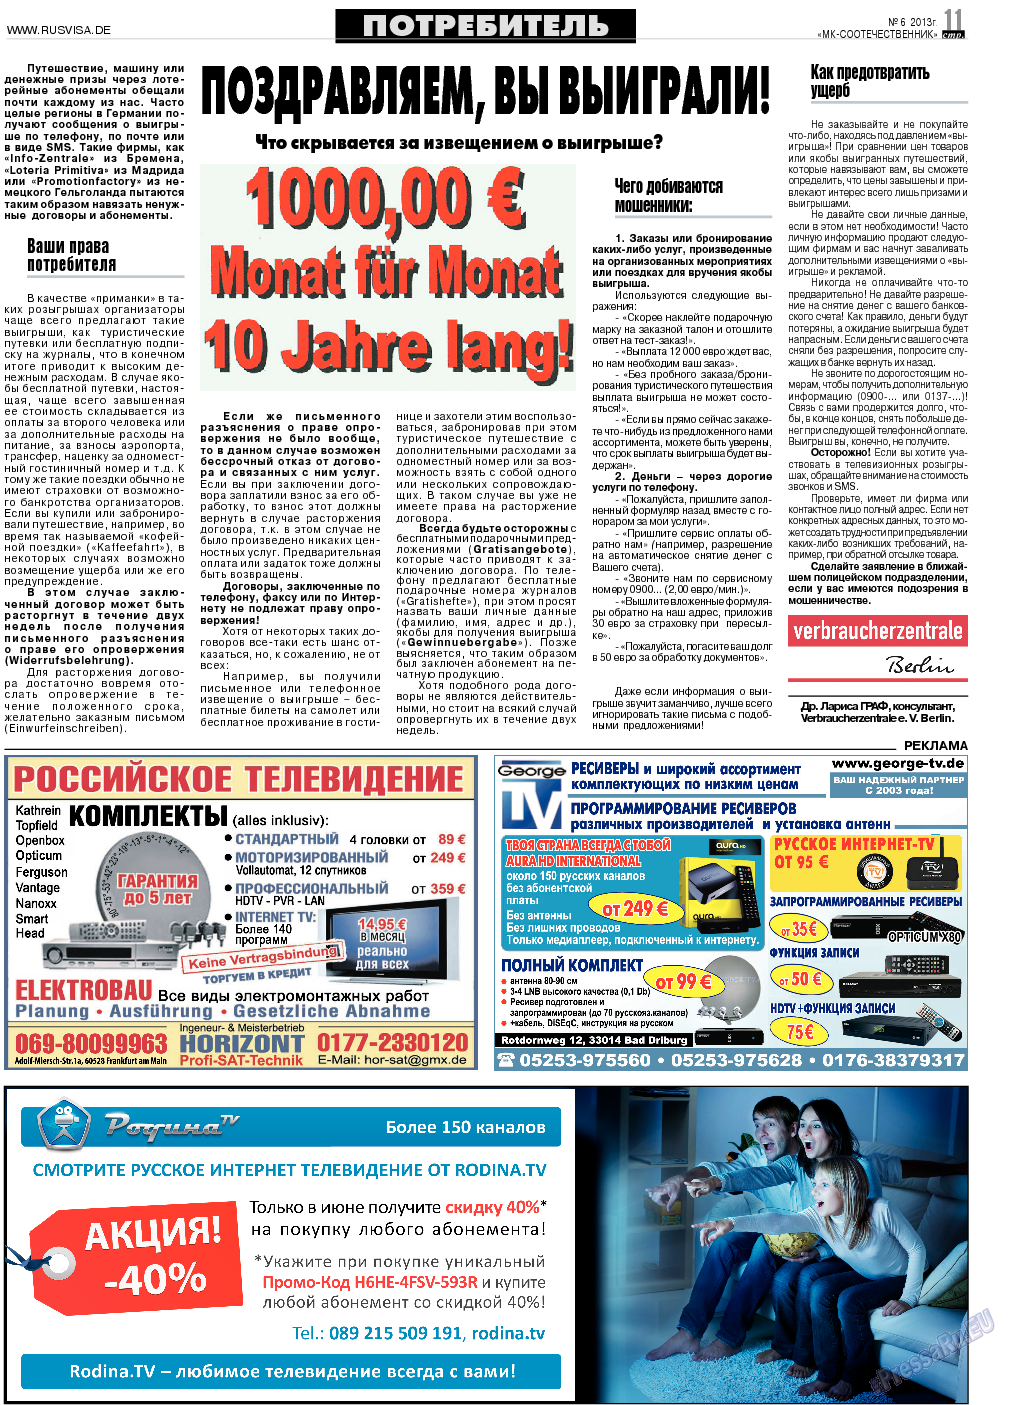 МК-Германия планета мнений, газета. 2013 №6 стр.11